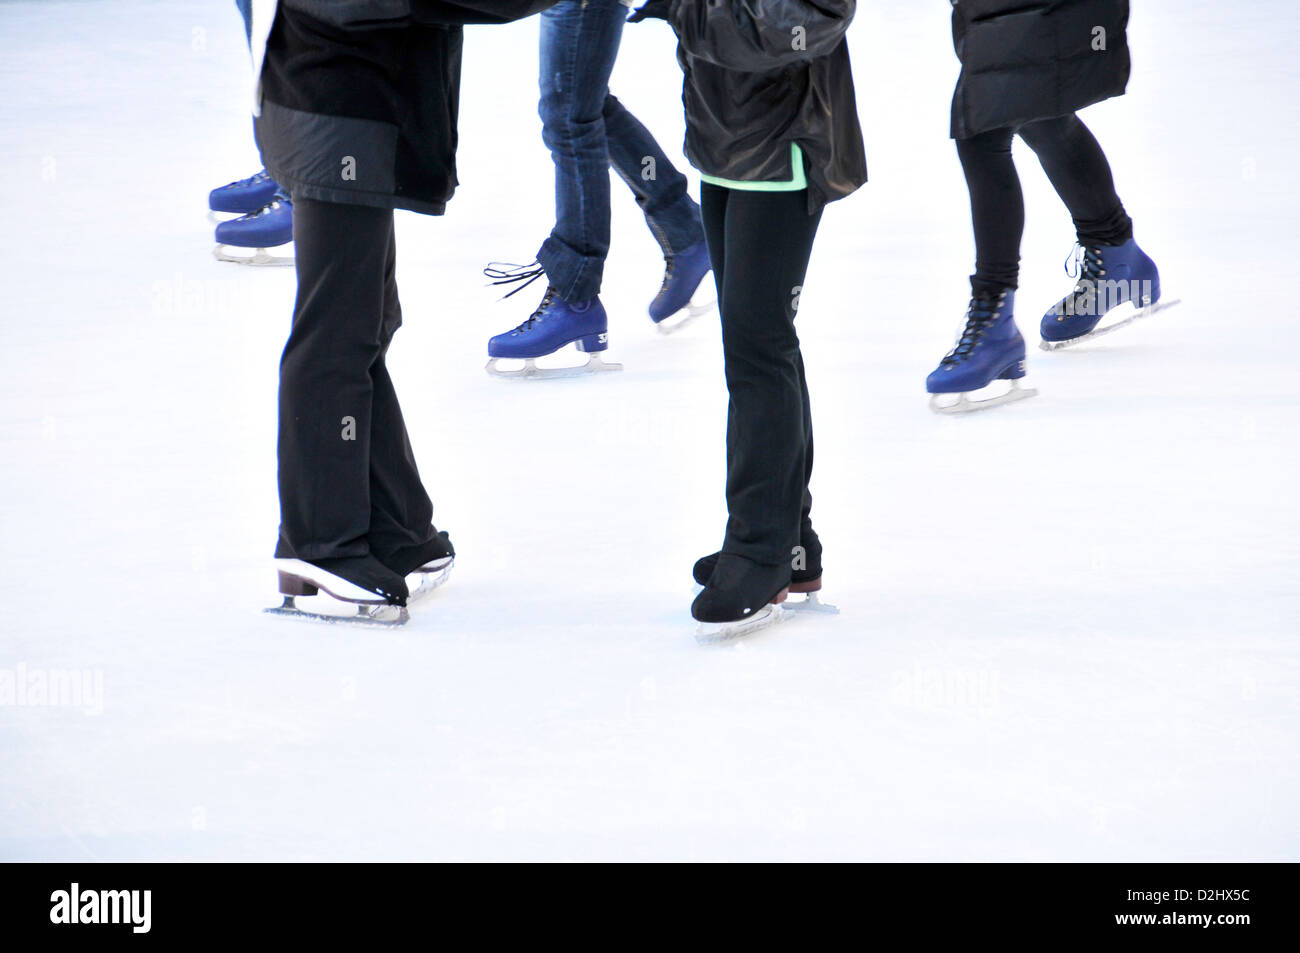 Ice Skating during the Christmas holiday at Rockefeller Center, Manhattan, New York City, USA Stock Photo